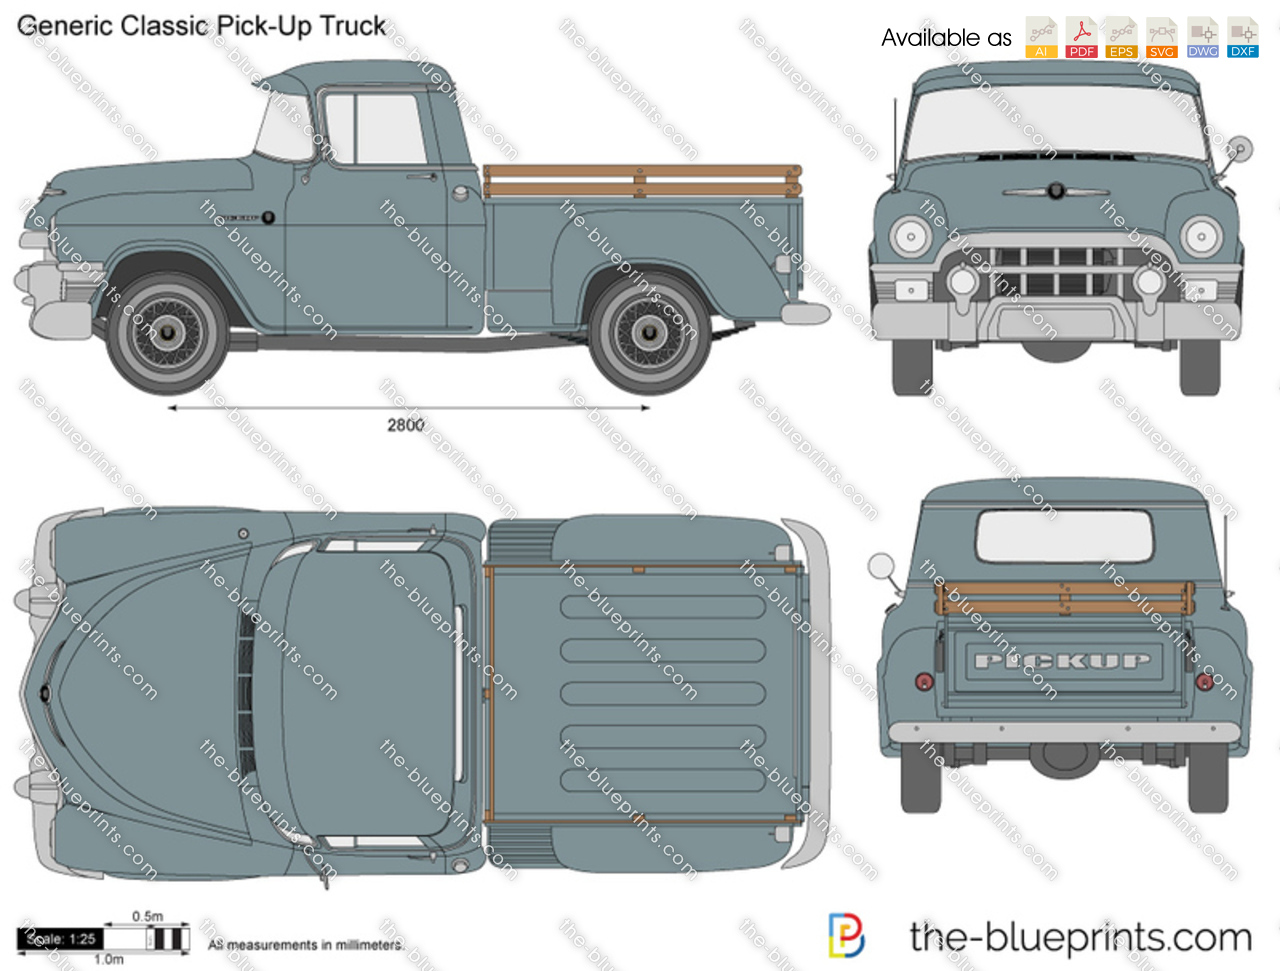 Generic Classic Pick-Up Truck